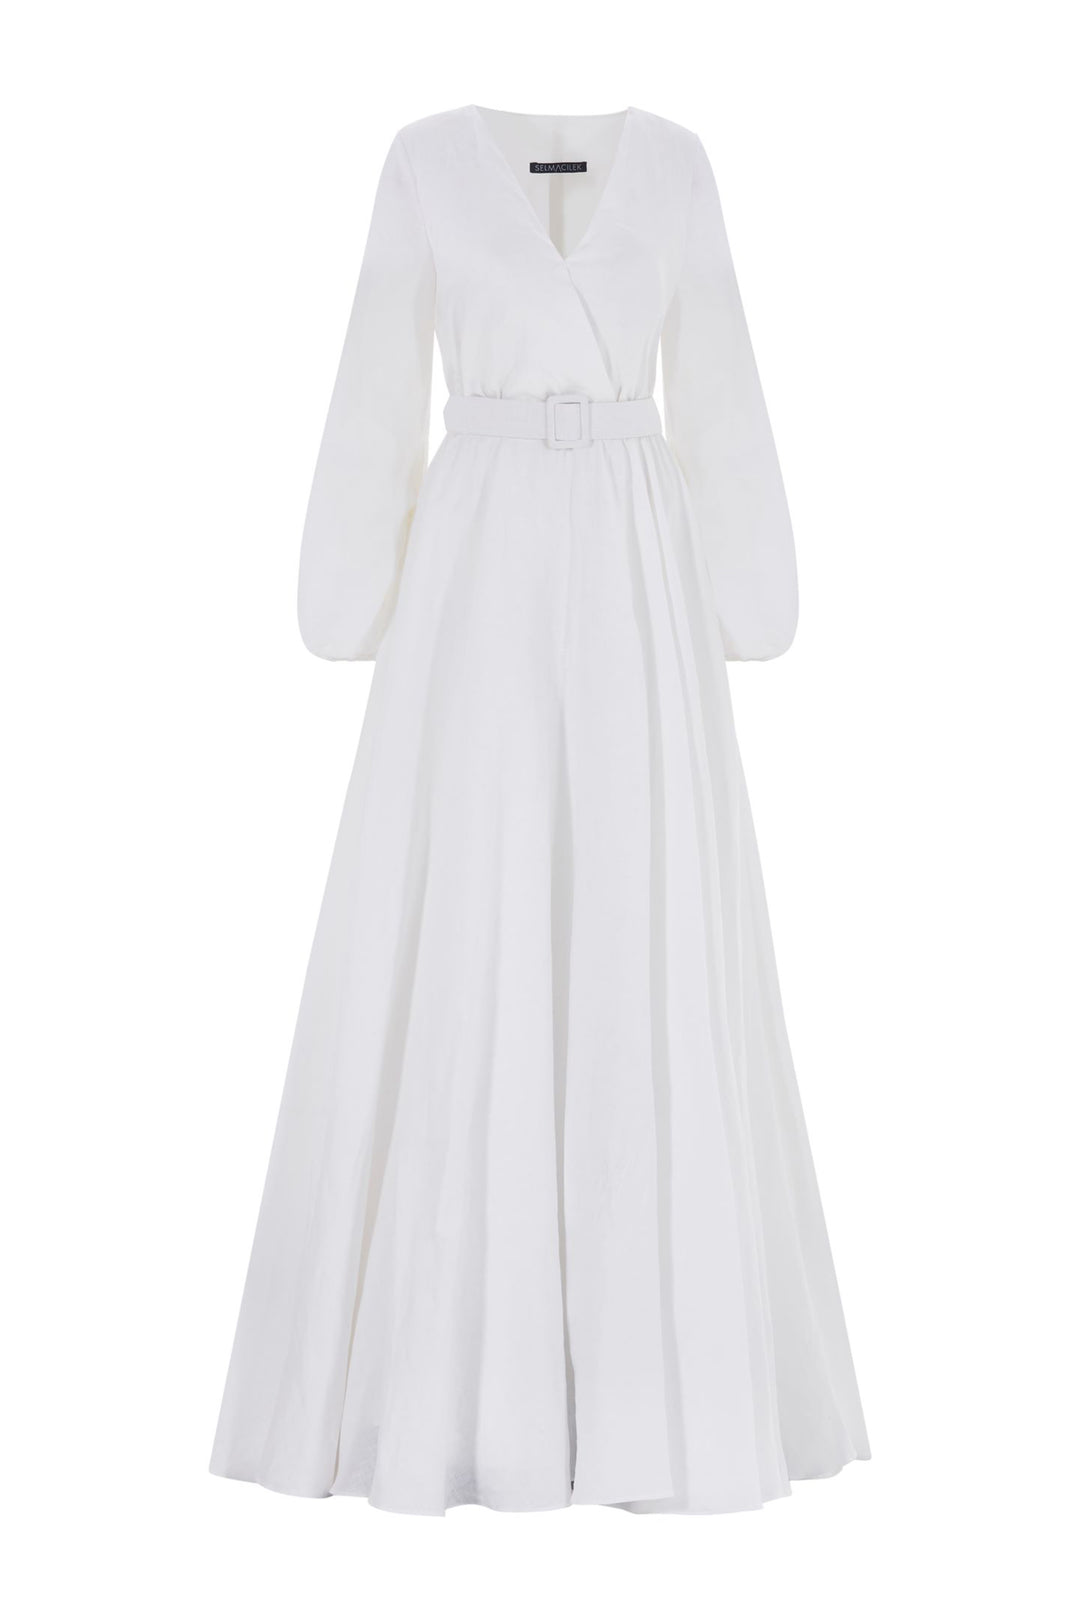 Beyaz V-Yaka, Uzun-Kol, Keten Maxi Elbise